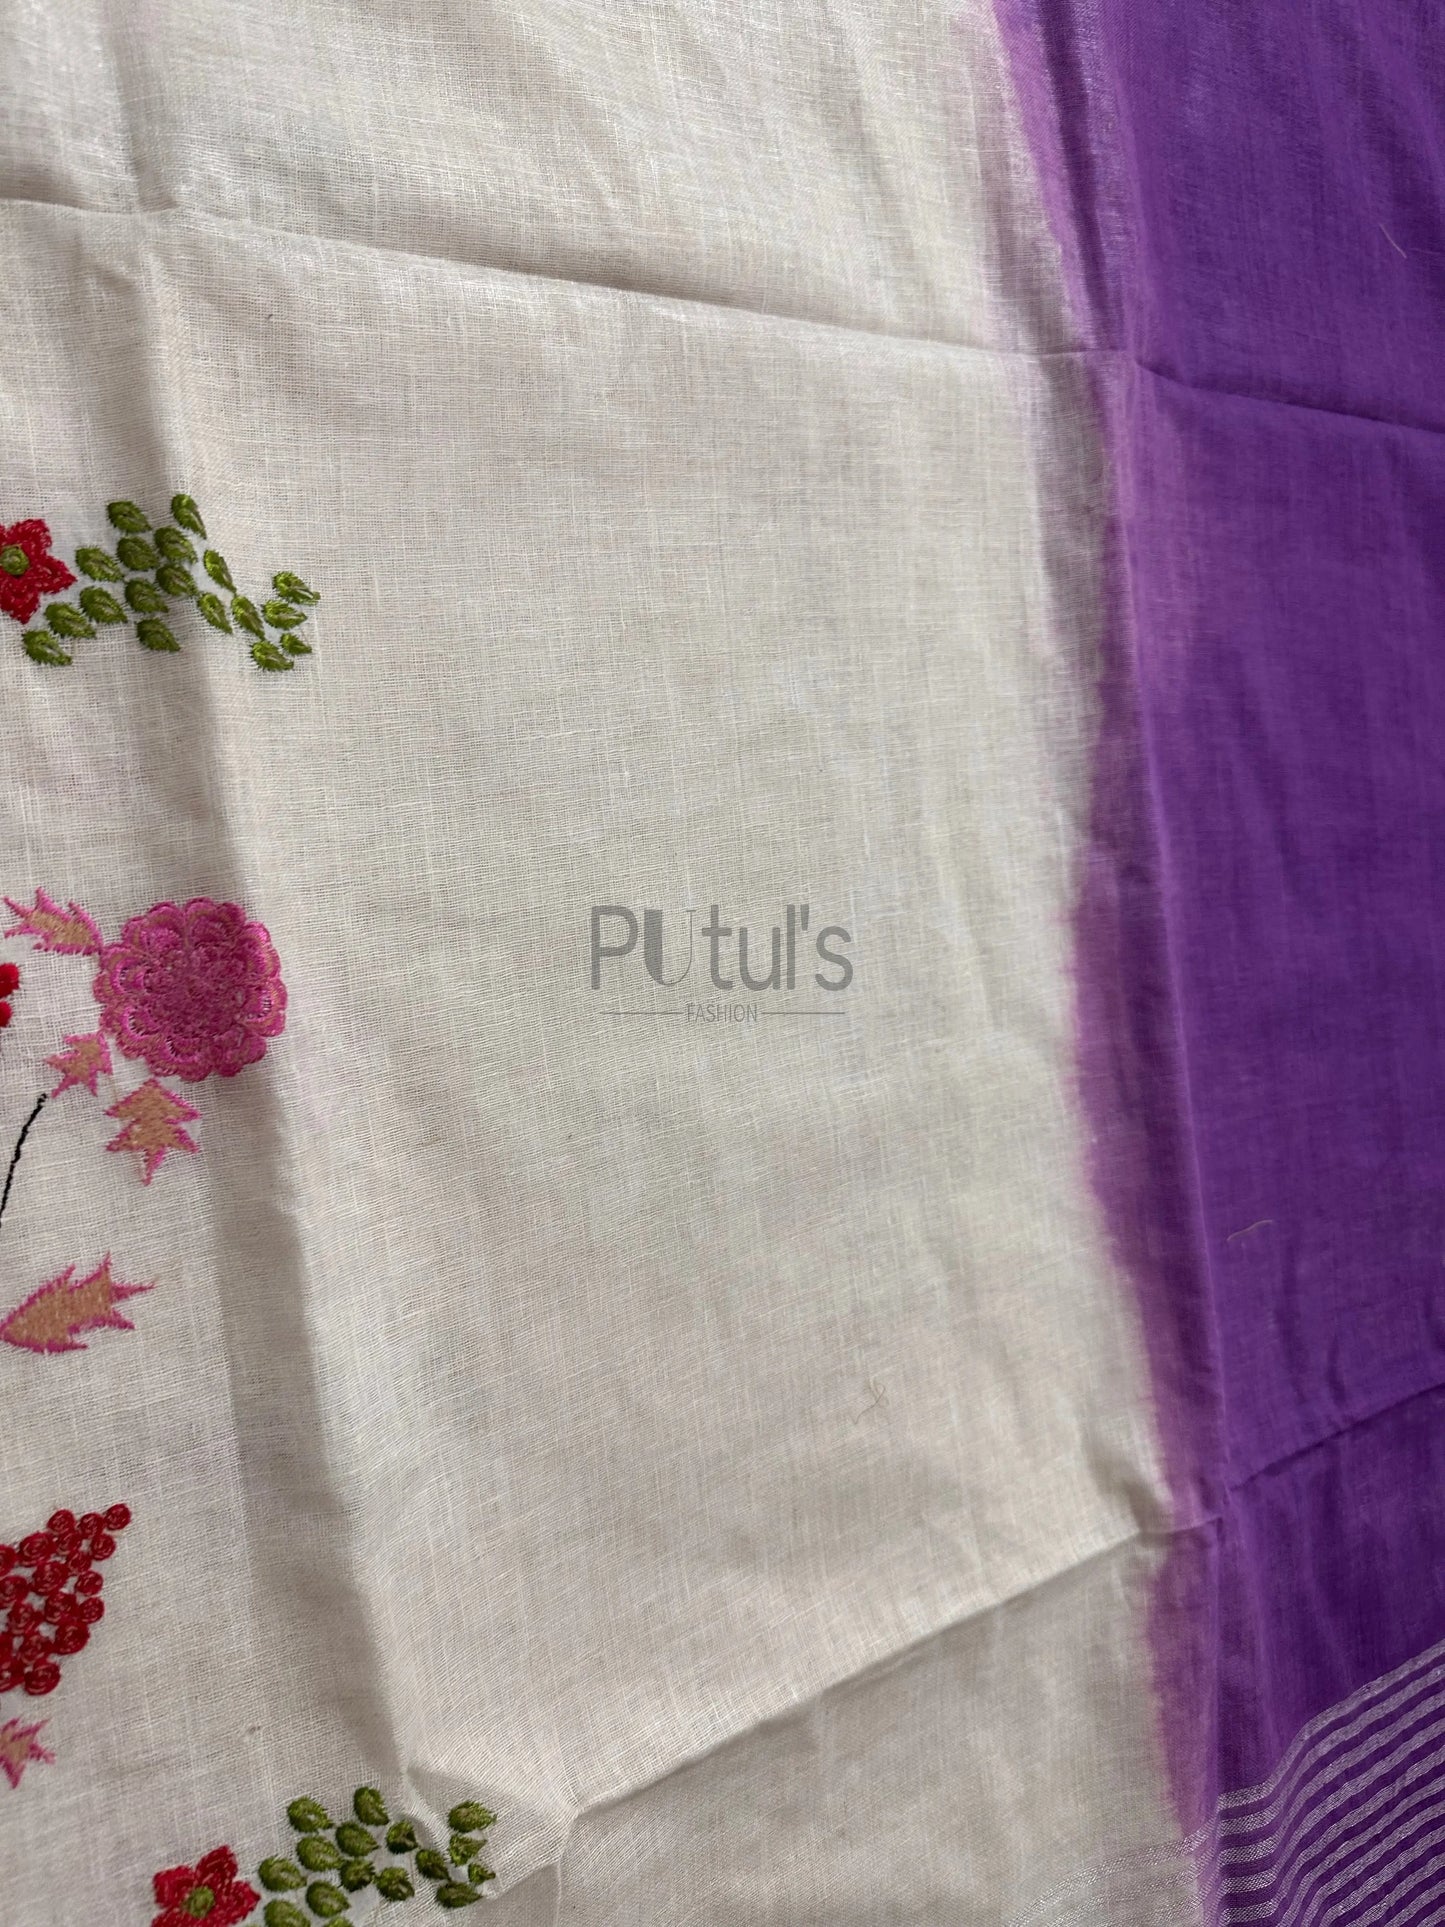 Computer embroidery on majestic Linen saree Super soft quality Putul's Fashion